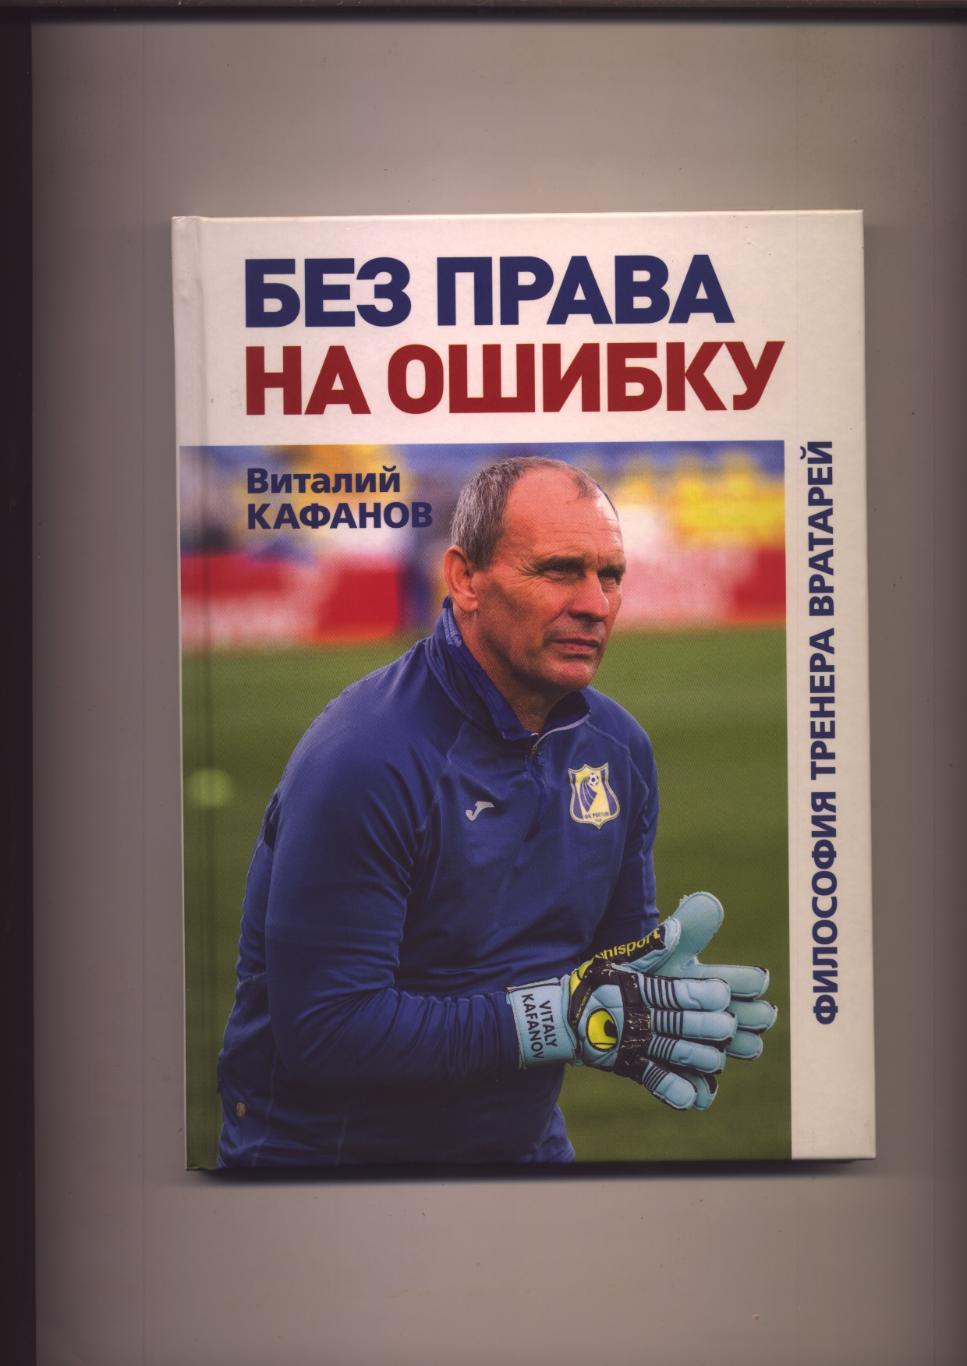 Книга Футбол Кафанов Без права на ошибку Философия тренера вратарей См описание